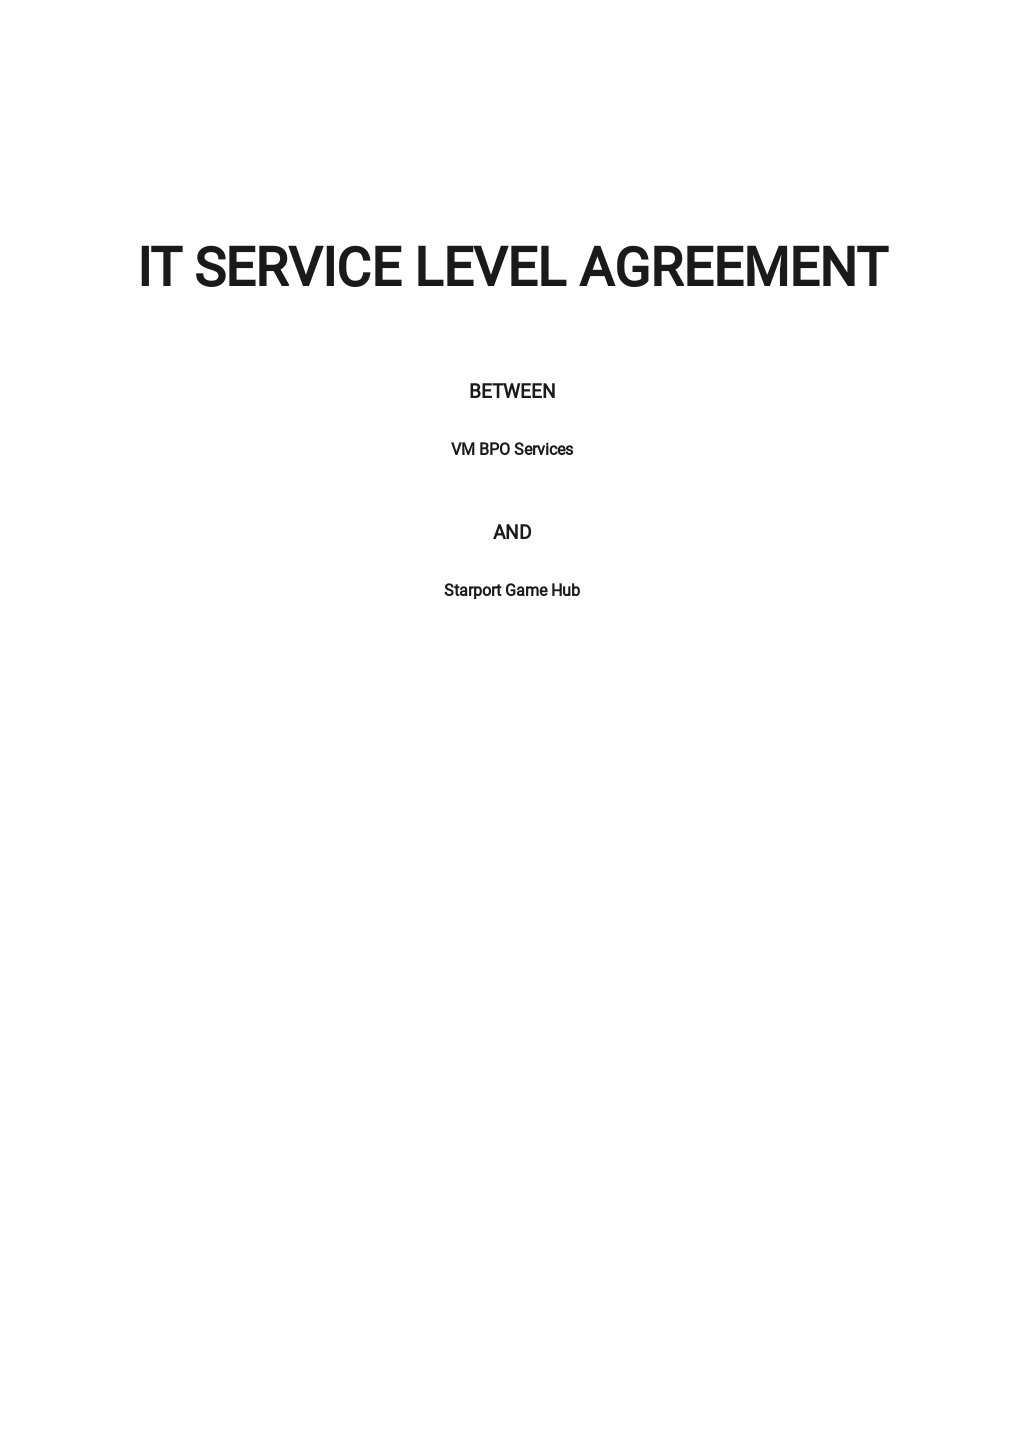 IT Service Level Agreement Template.jpe